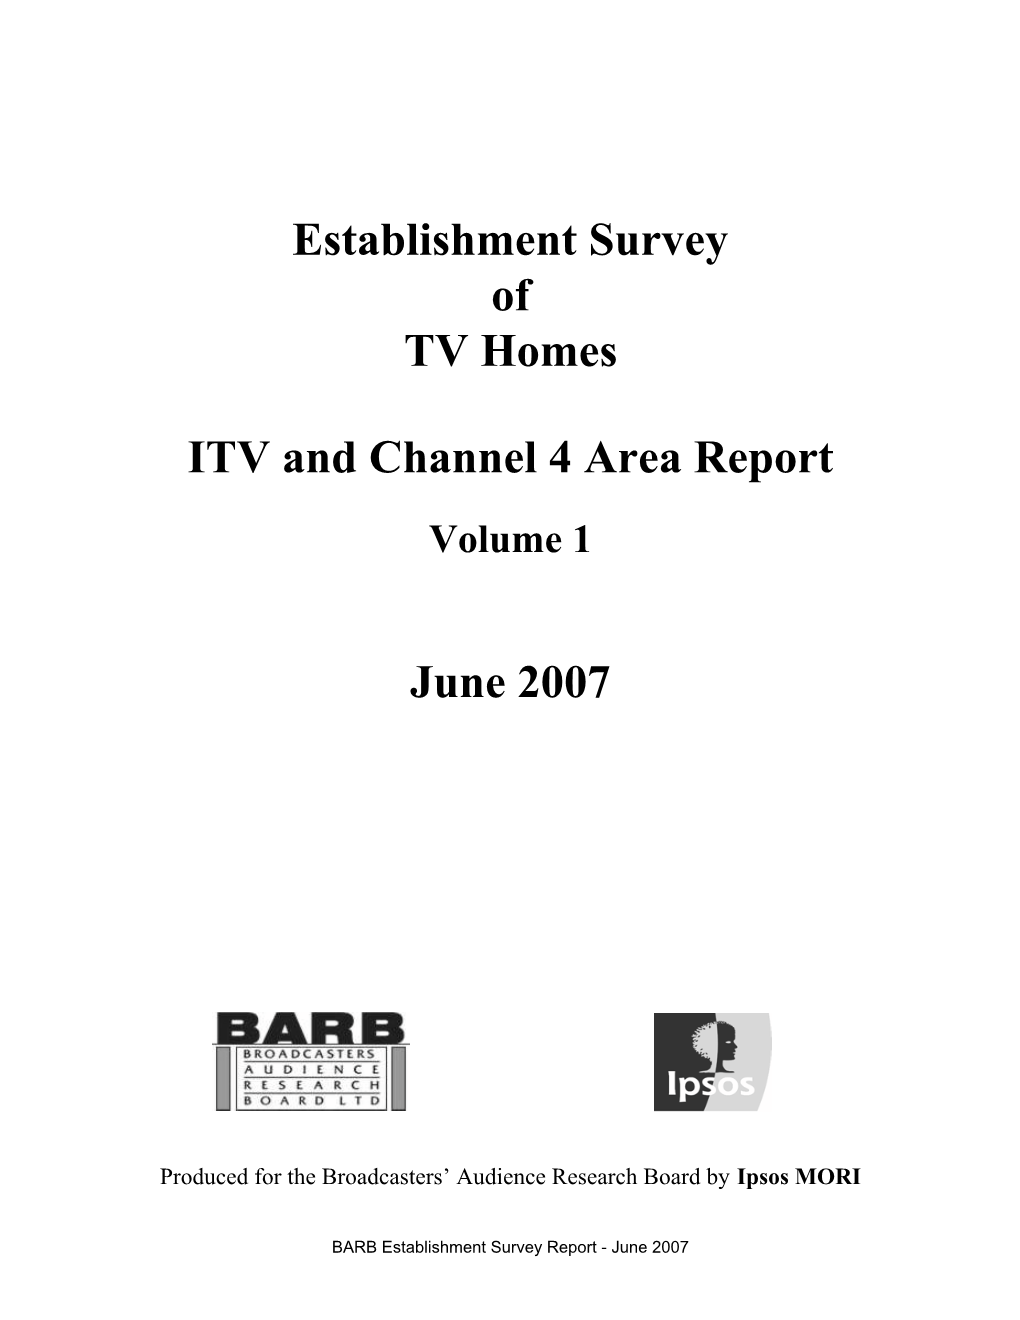 Establishment Survey of TV Homes June 2007 ITV and Channel 4 Area